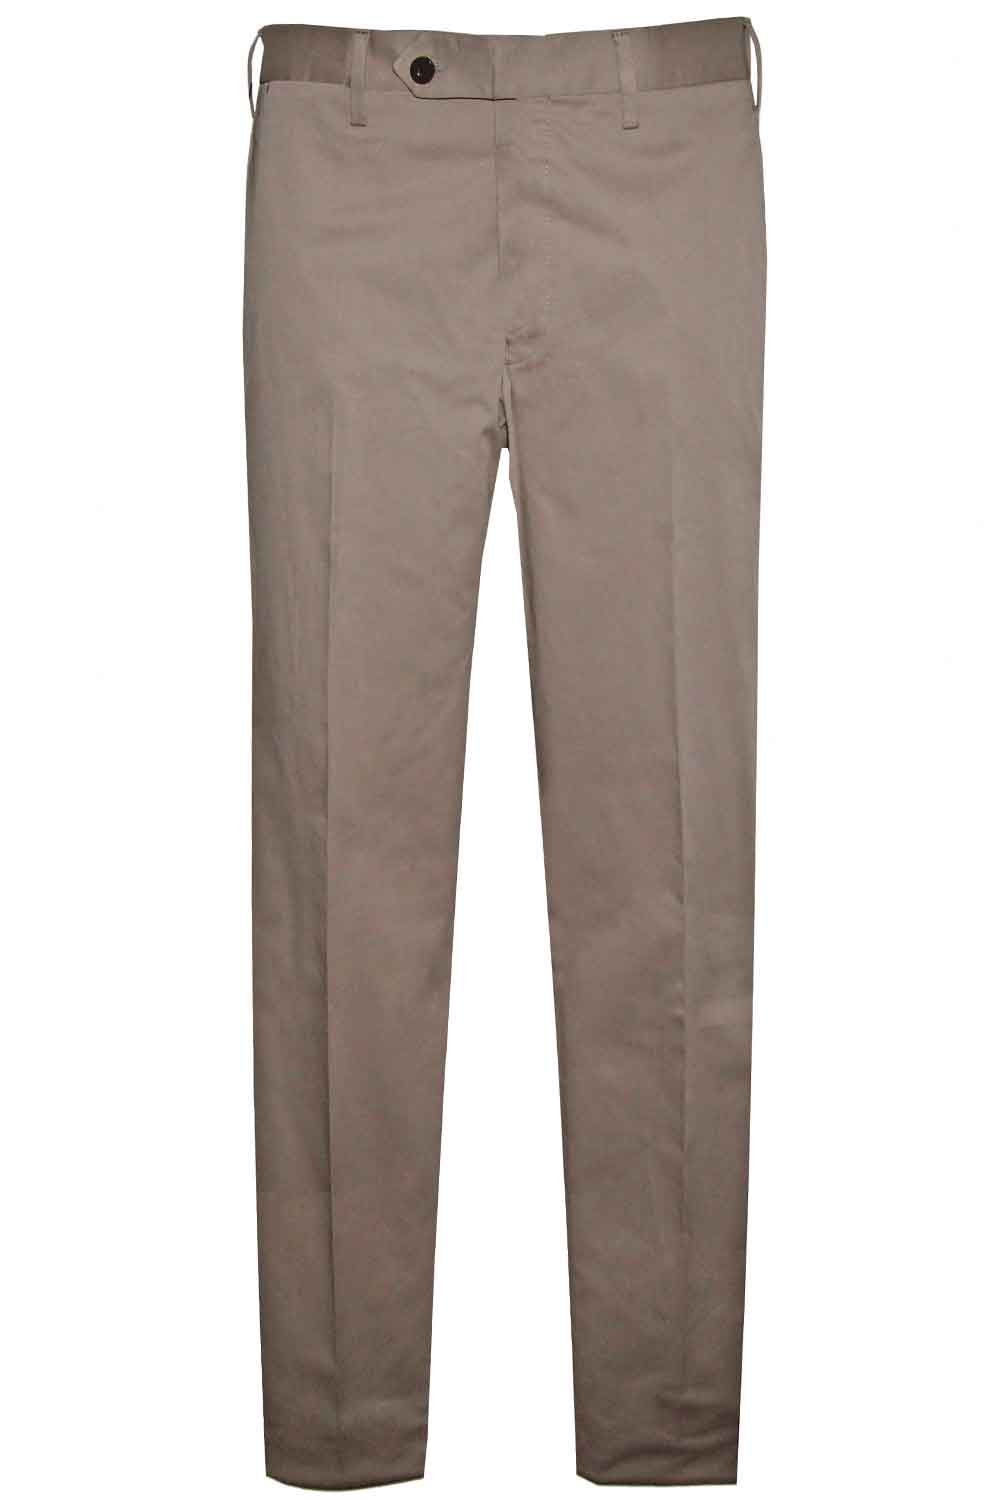 Pantalone con bustino- GERMANO Pantaloni e jeans GERMANO   